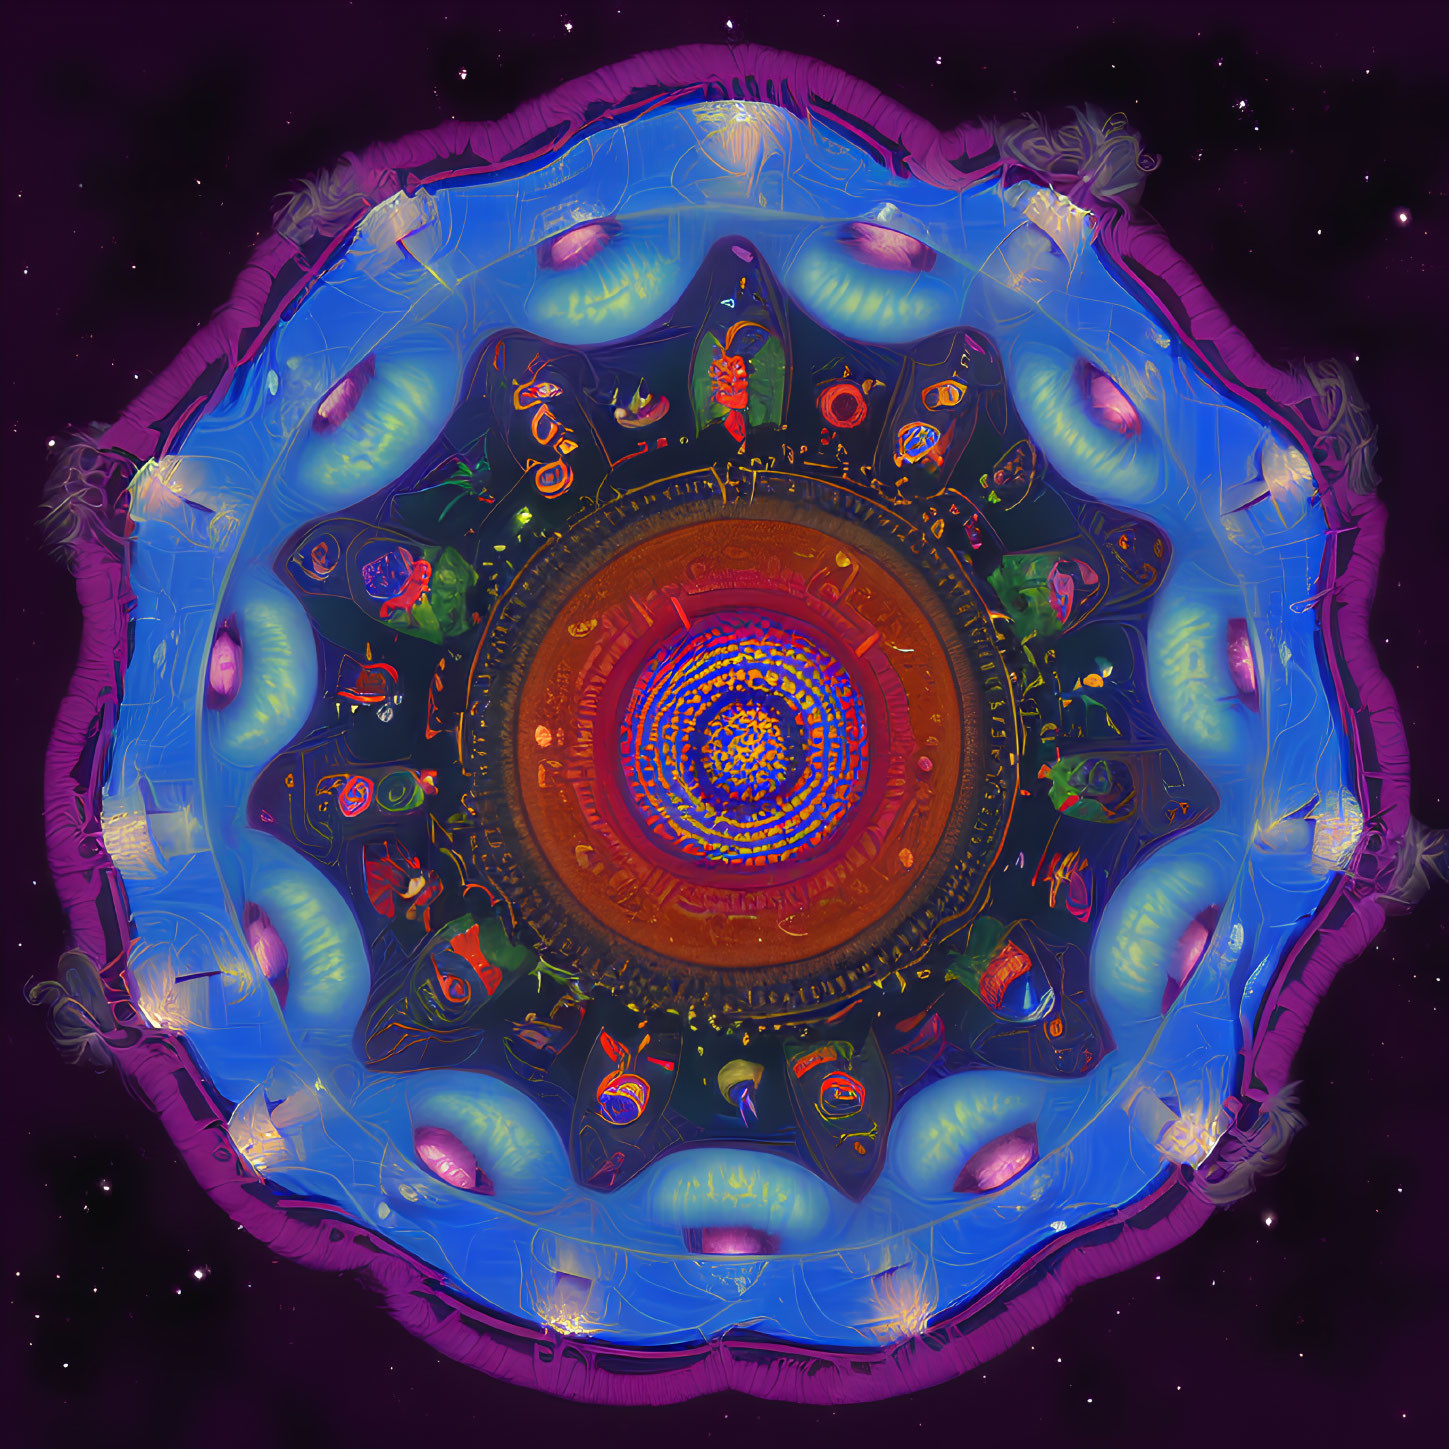 Colorful Digital Mandala with Eye Motif on Cosmic Background